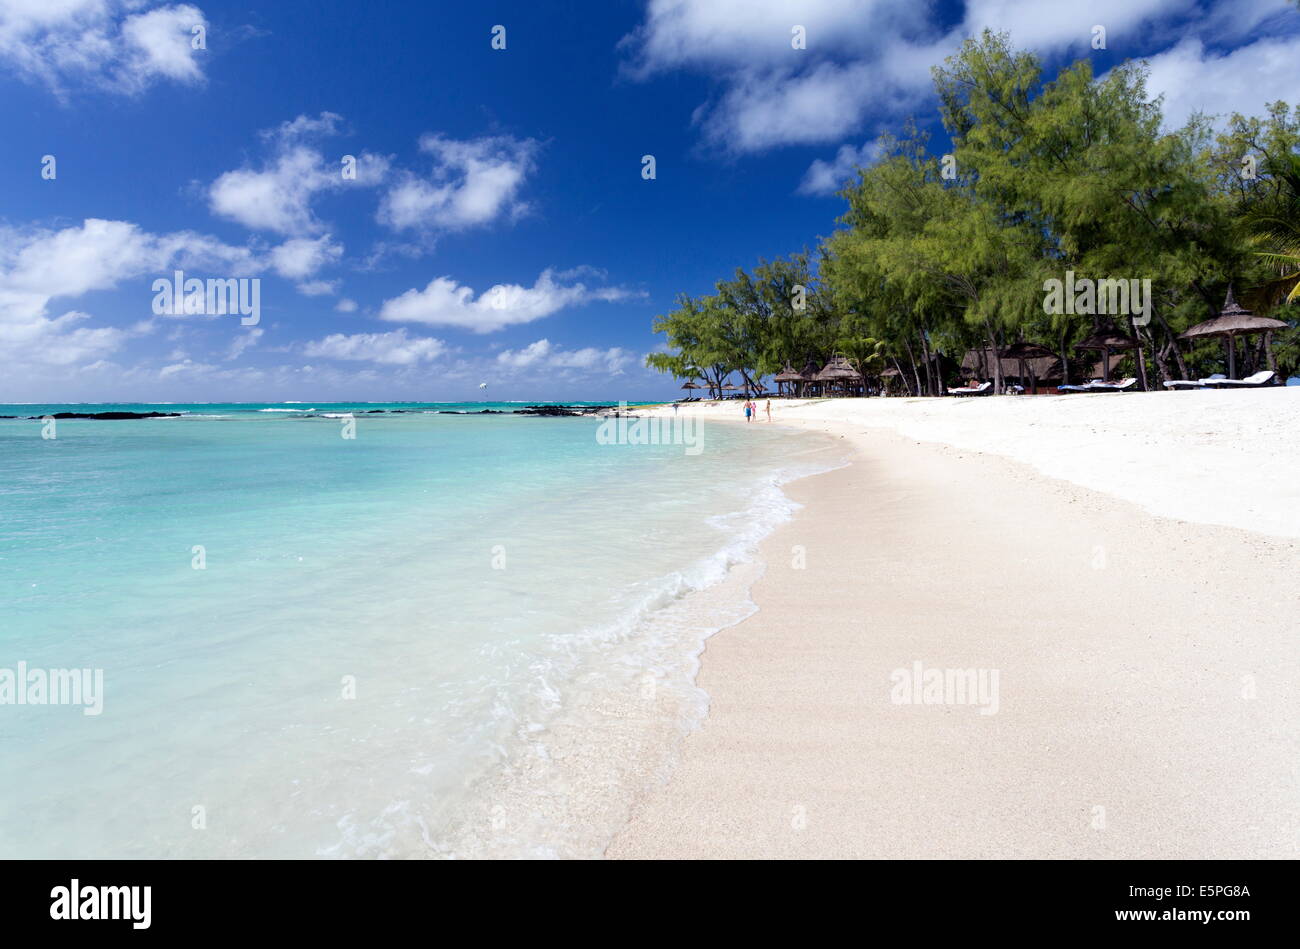 Idyllic beach scene with blue sky, aquamarine sea and soft sand, Ile Aux Cerfs, Mauritius, Indian Ocean, Africa Stock Photo